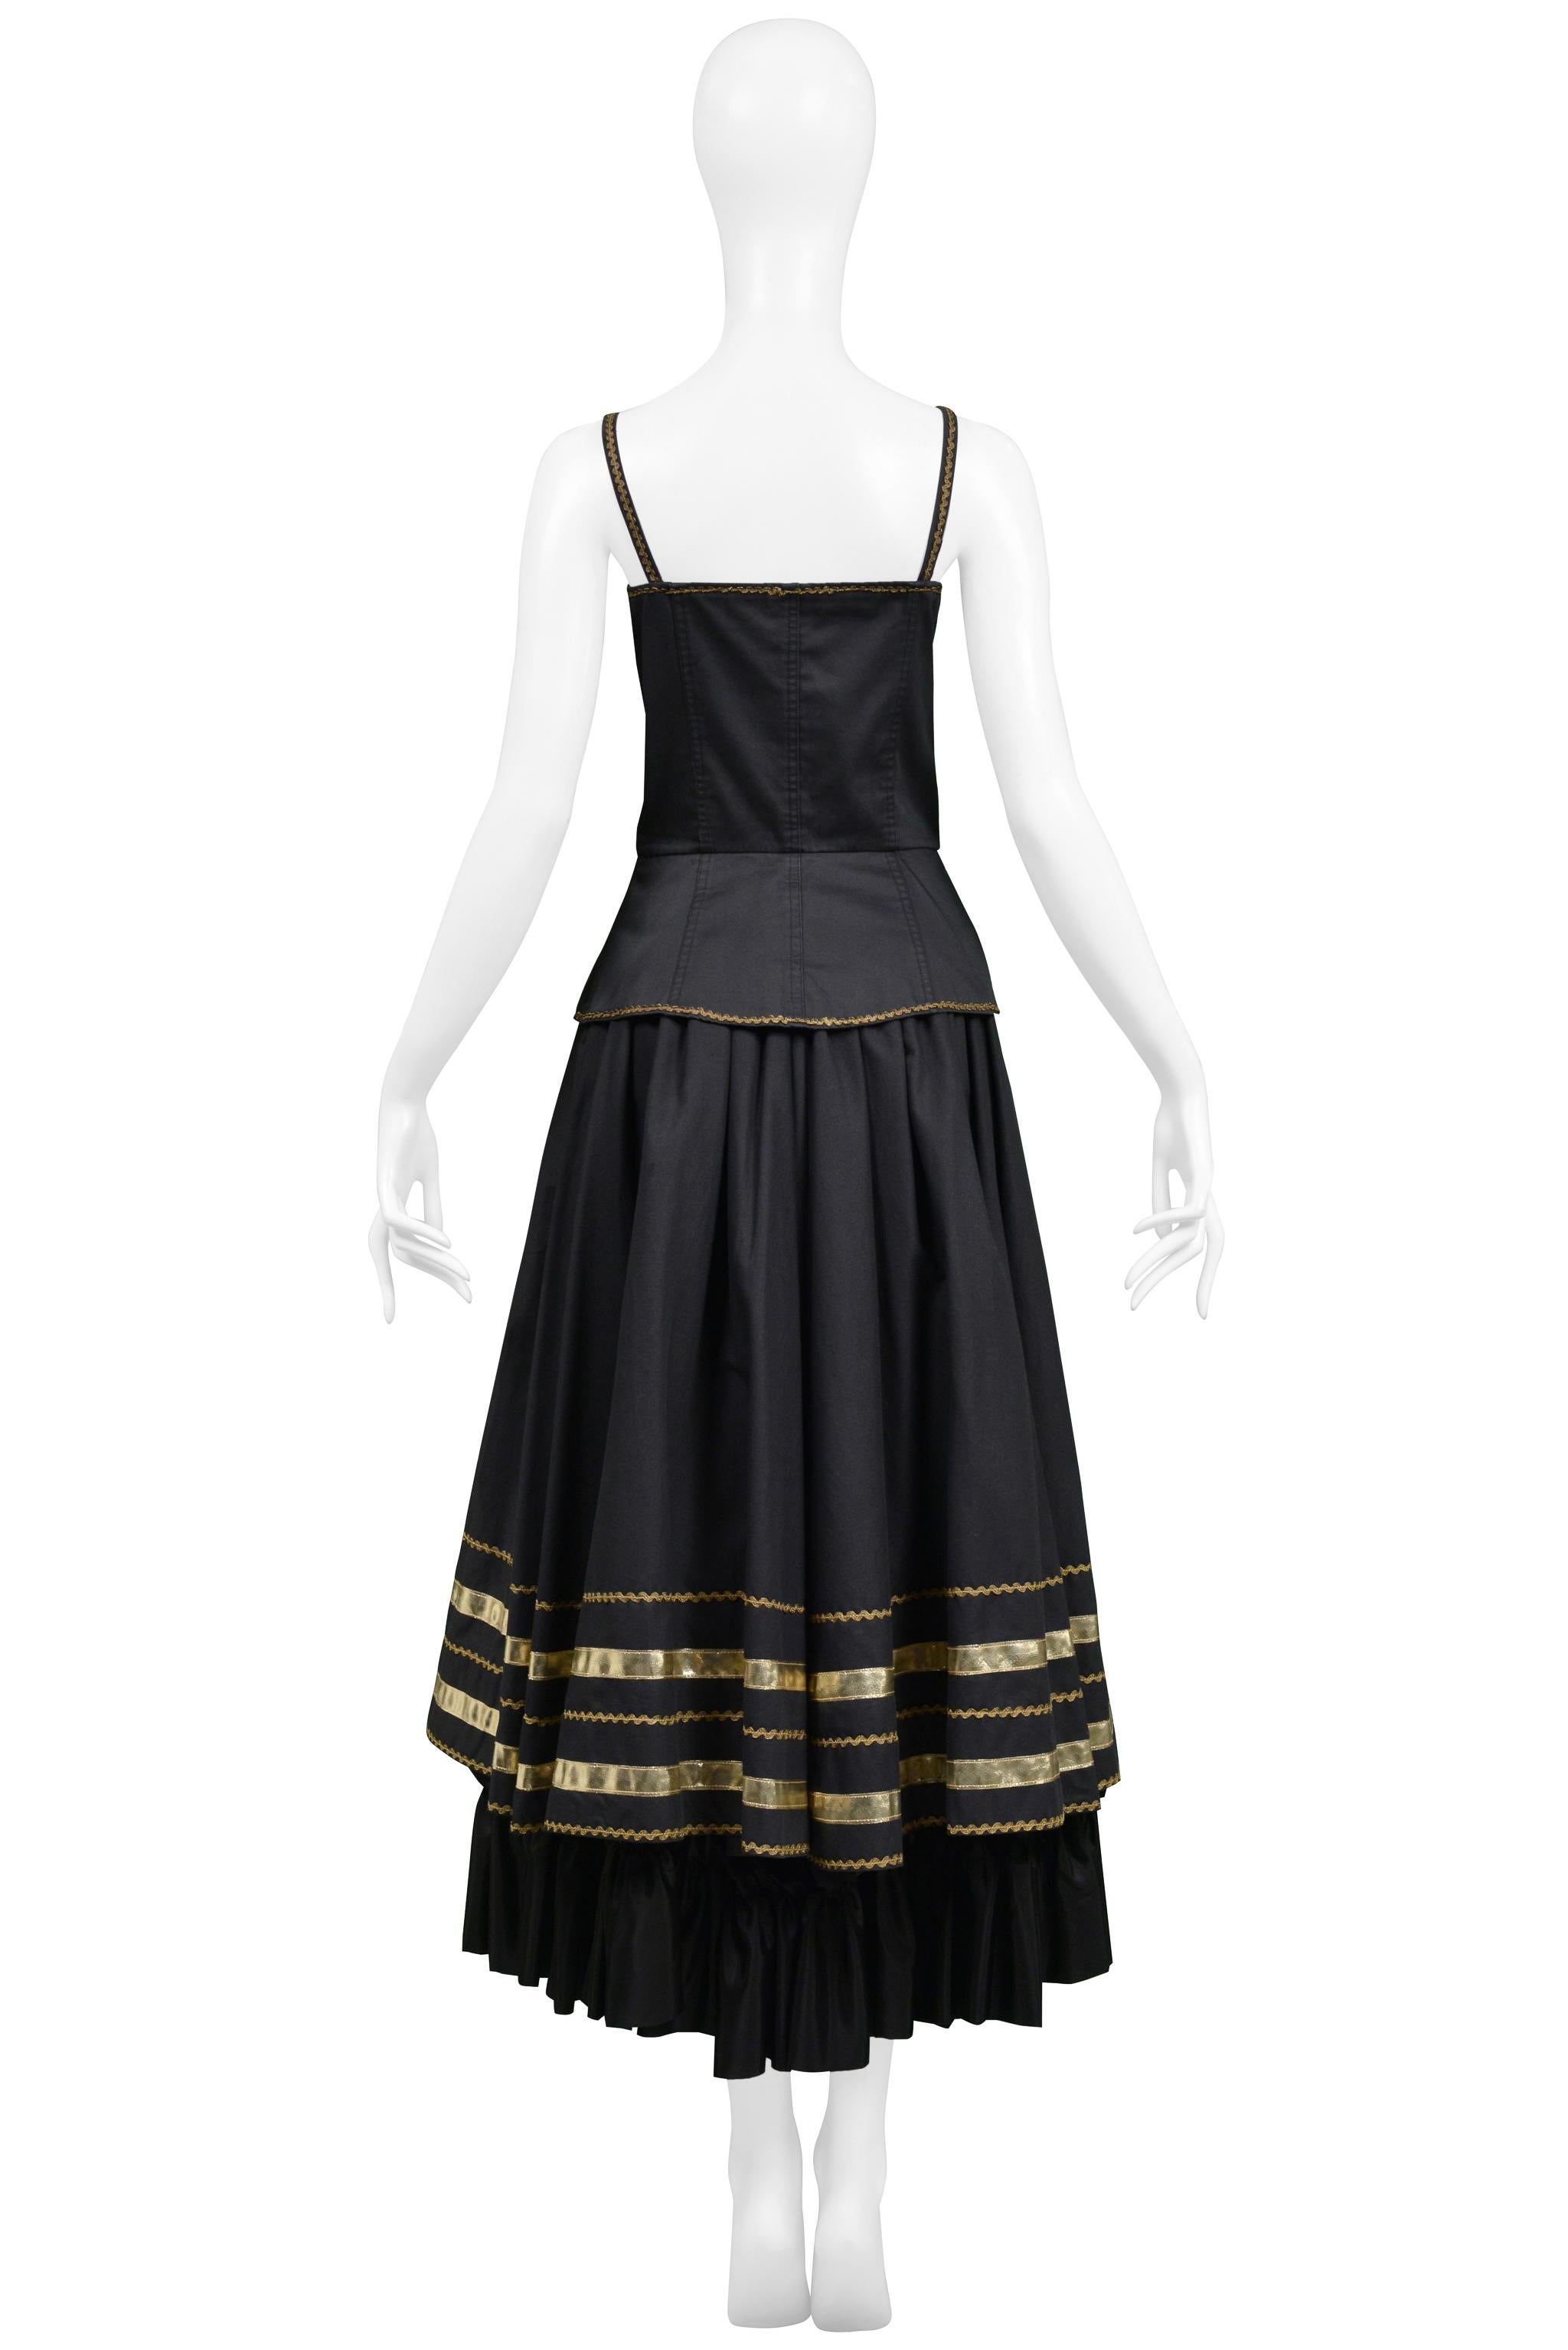 Yves Saint Laurent Ysl Black & Gold Corset Top & Fancy Peasant Skirt 1970s For Sale 4